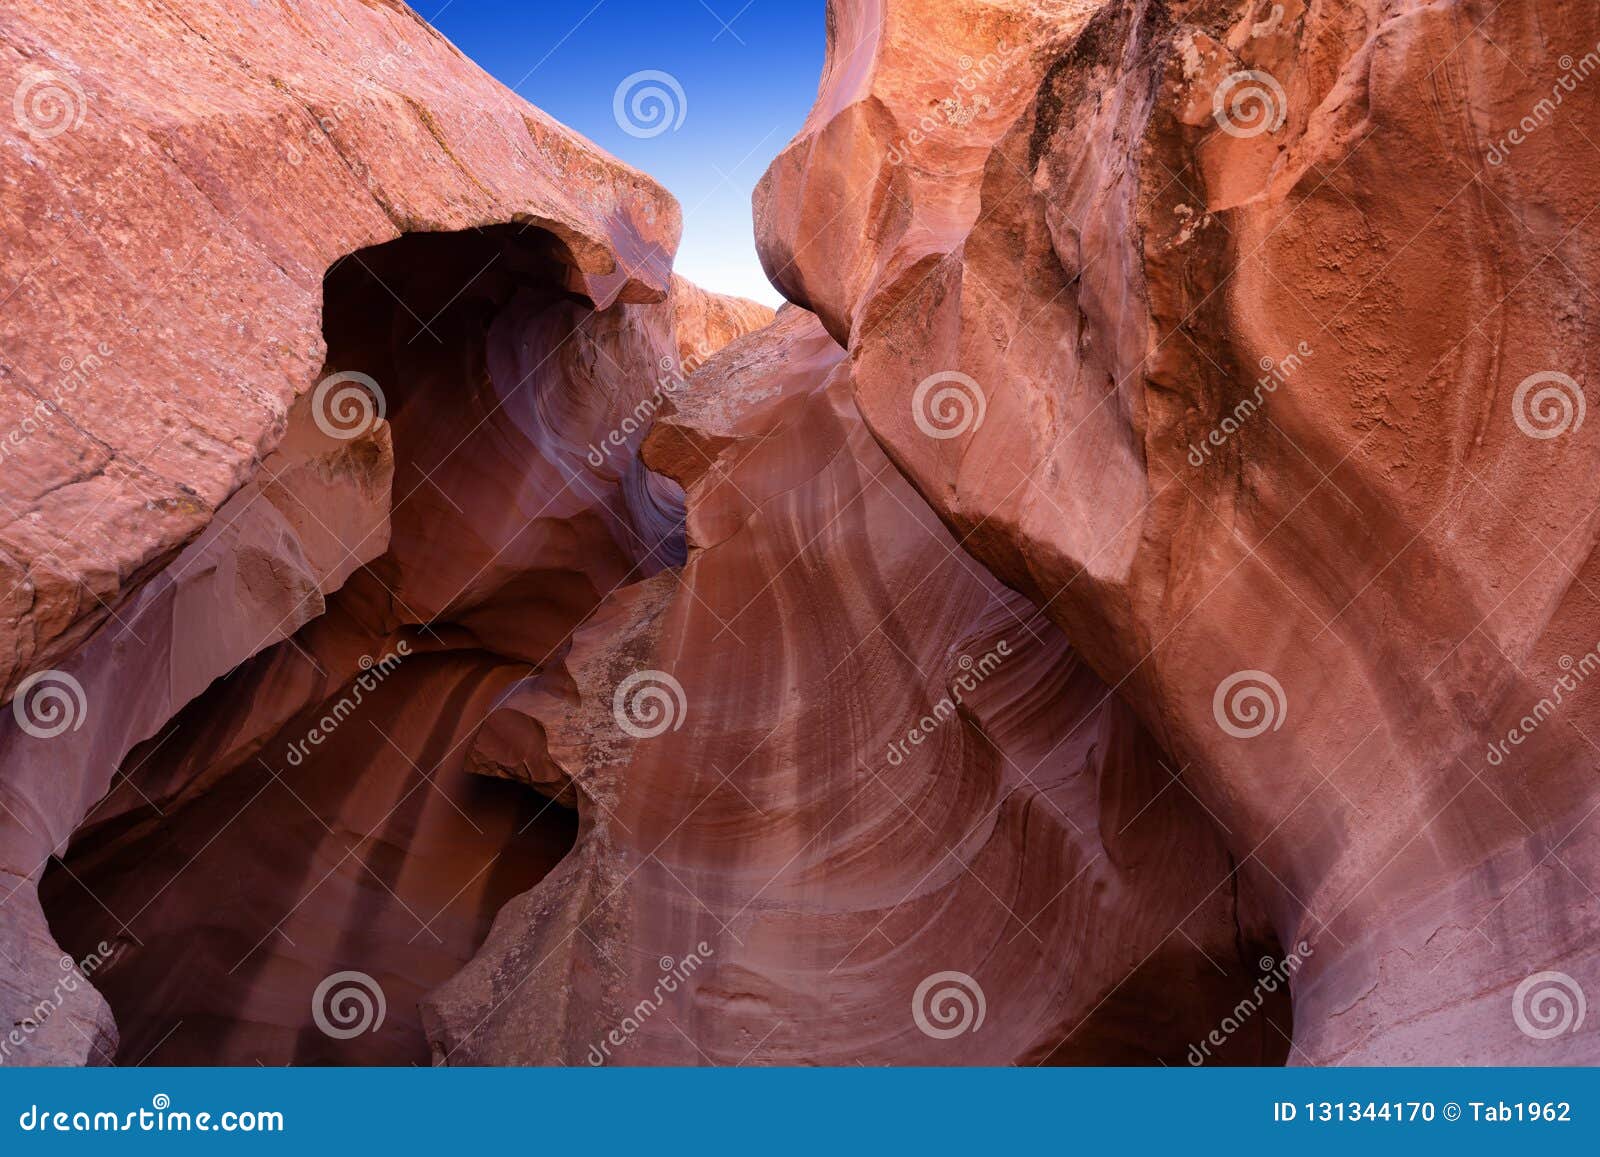 Antelope Canyon Rock Formation In Arizona Stock Photo Image Of Rock